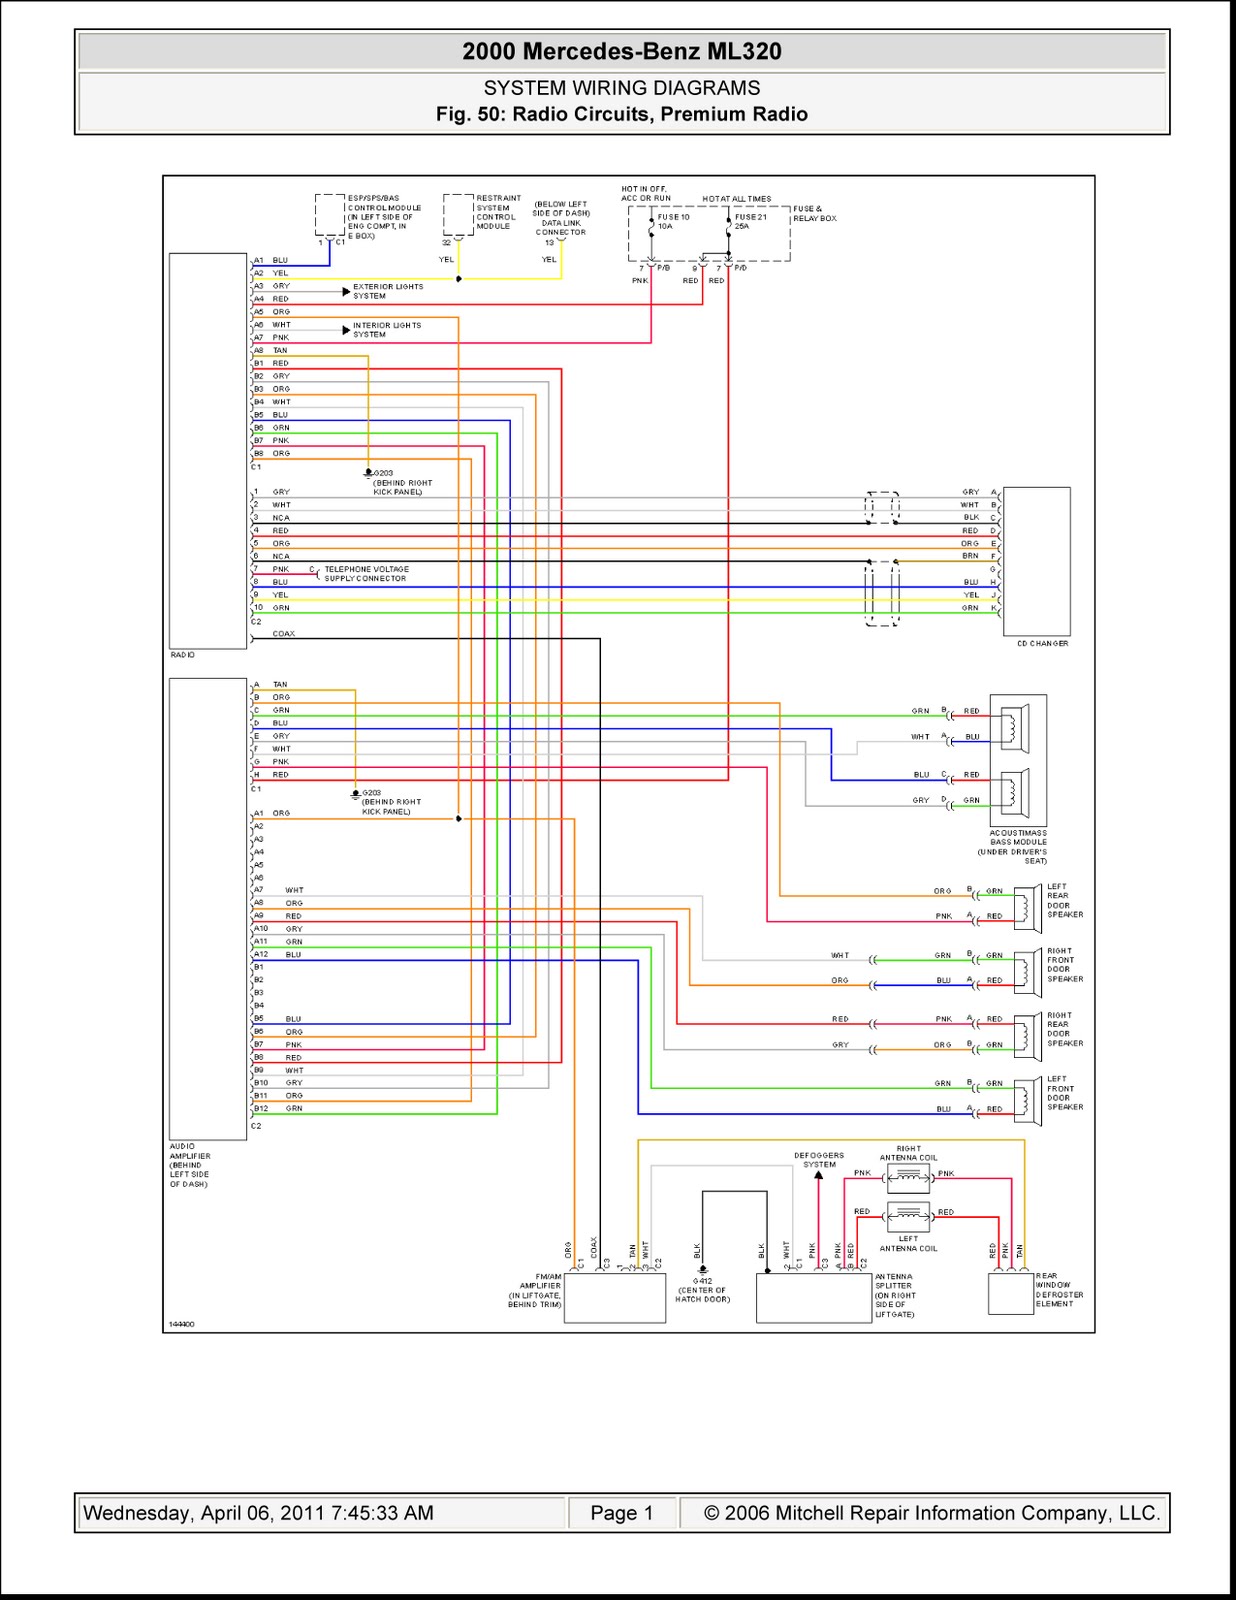 2000 Mercedes ml320 radio wiring diagram #6